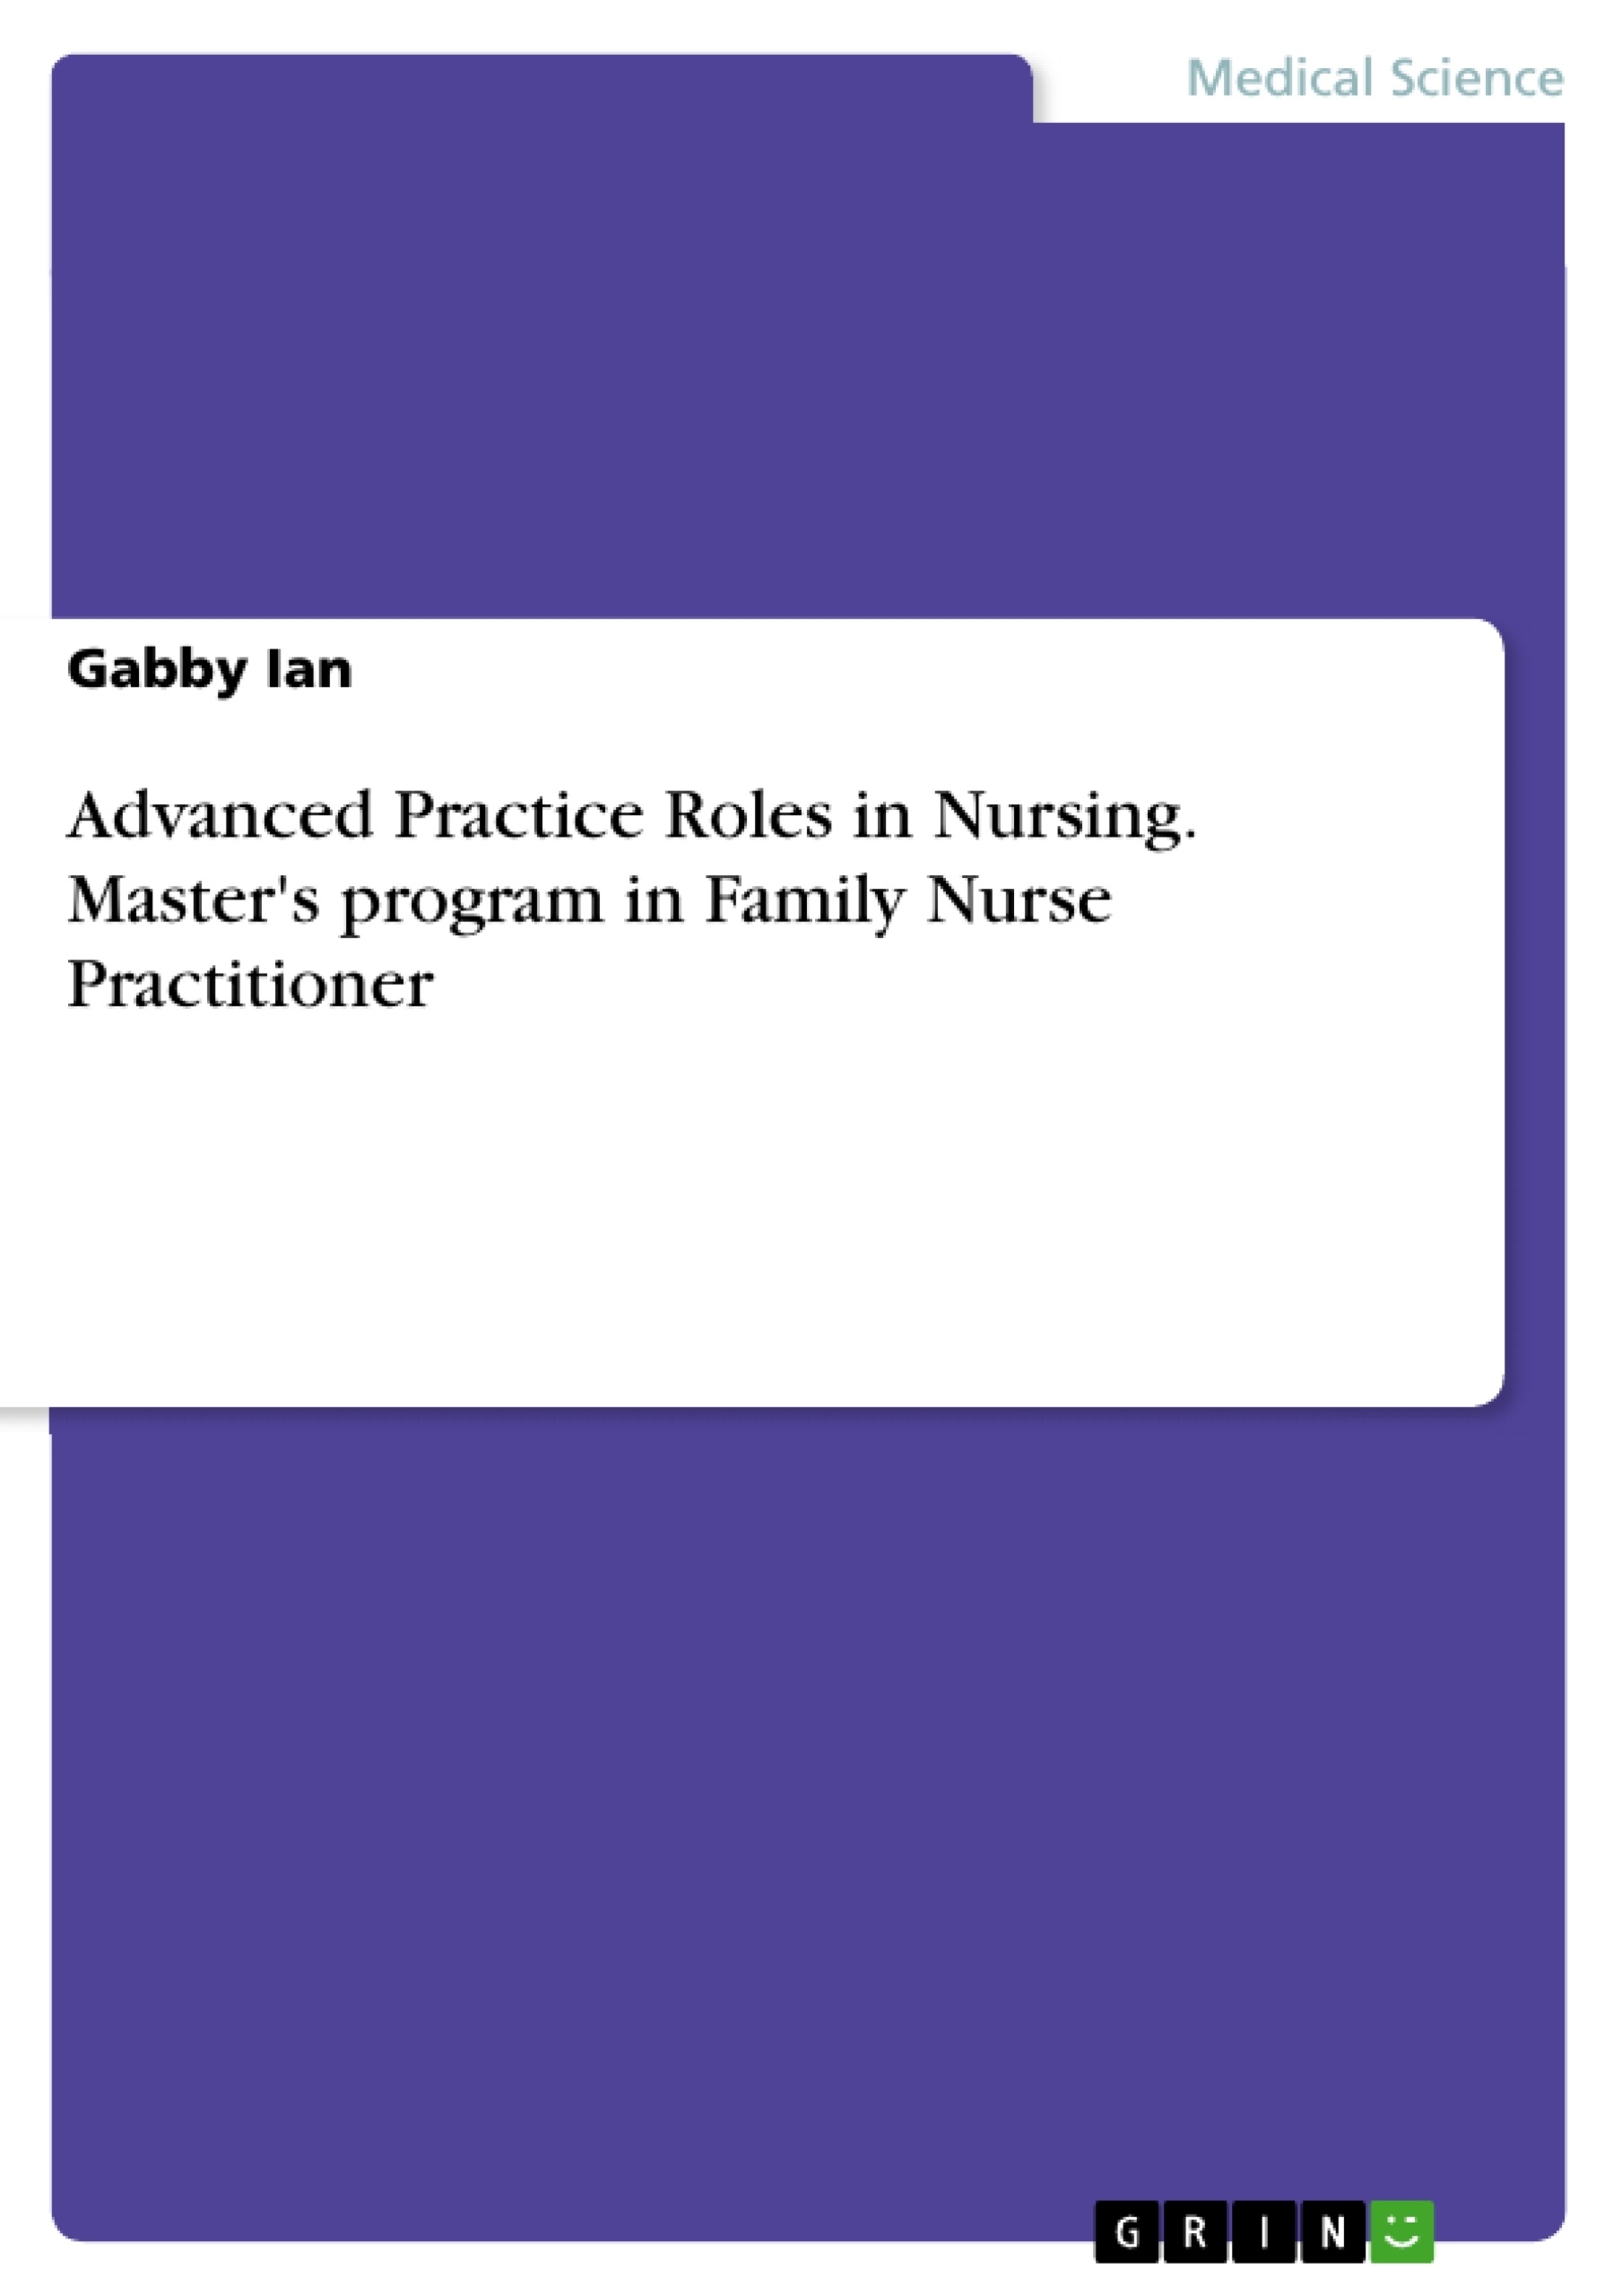 Title: Advanced Practice Roles in Nursing. Master's program in Family Nurse Practitioner